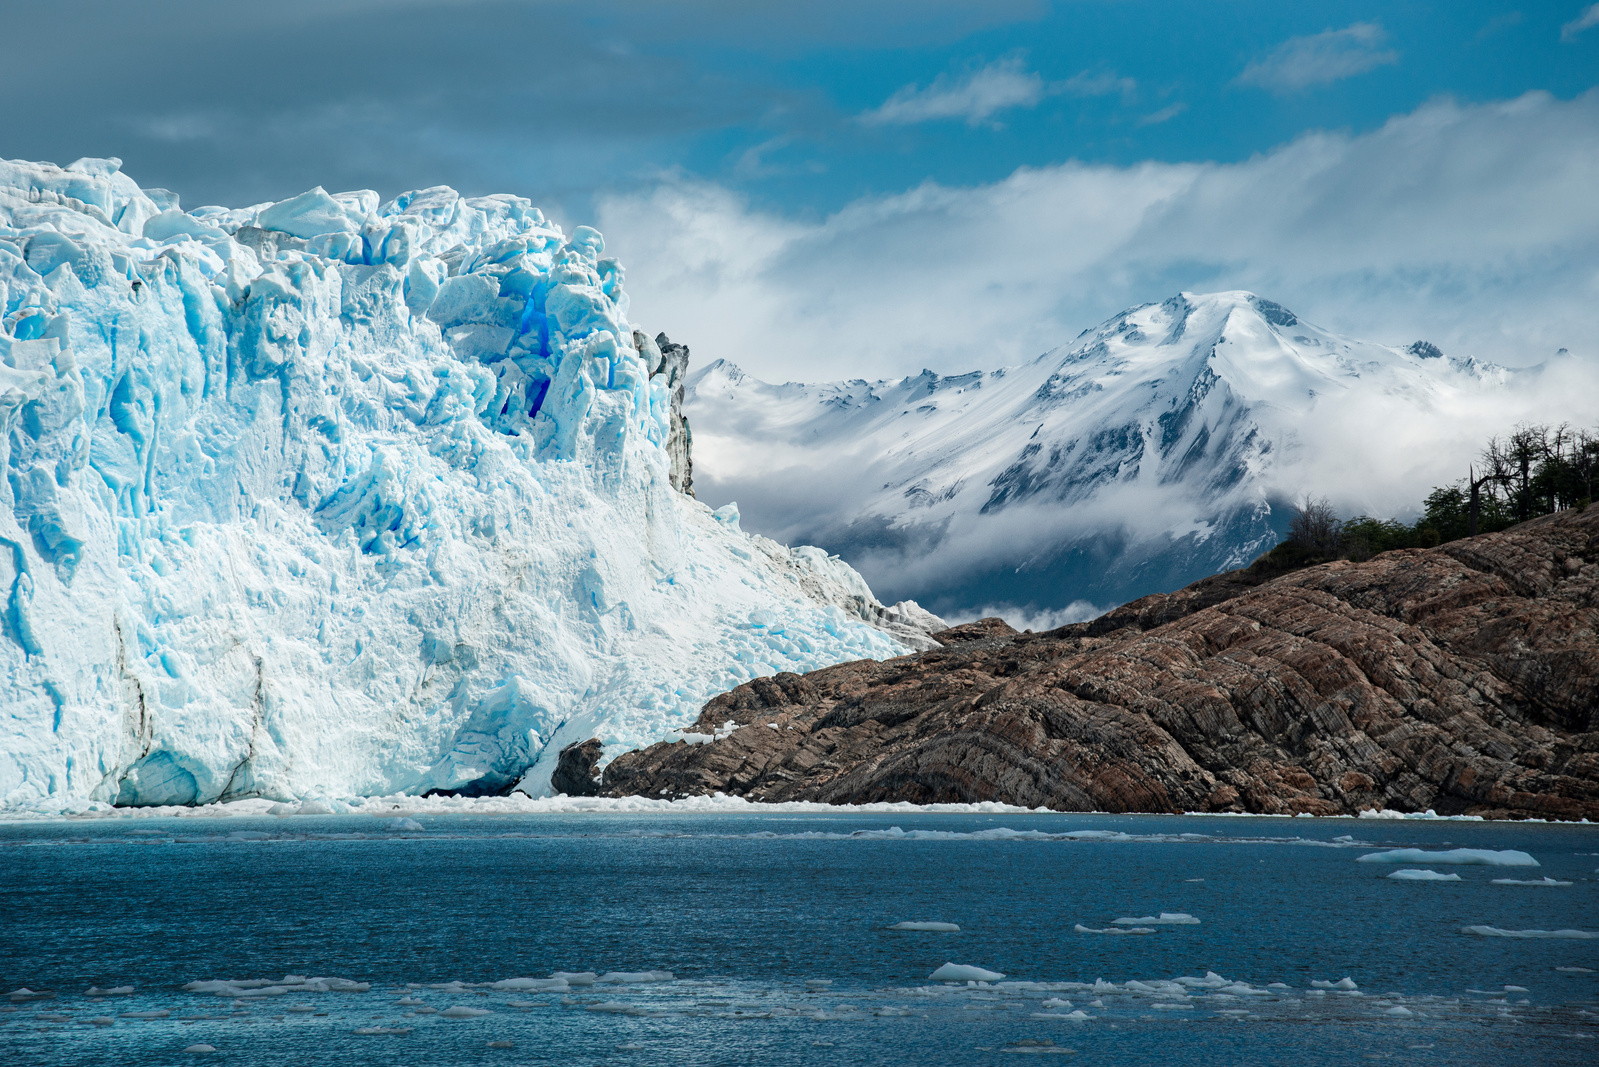 Glacier Spegazzini in El Calafate, Argentina in Patagonia